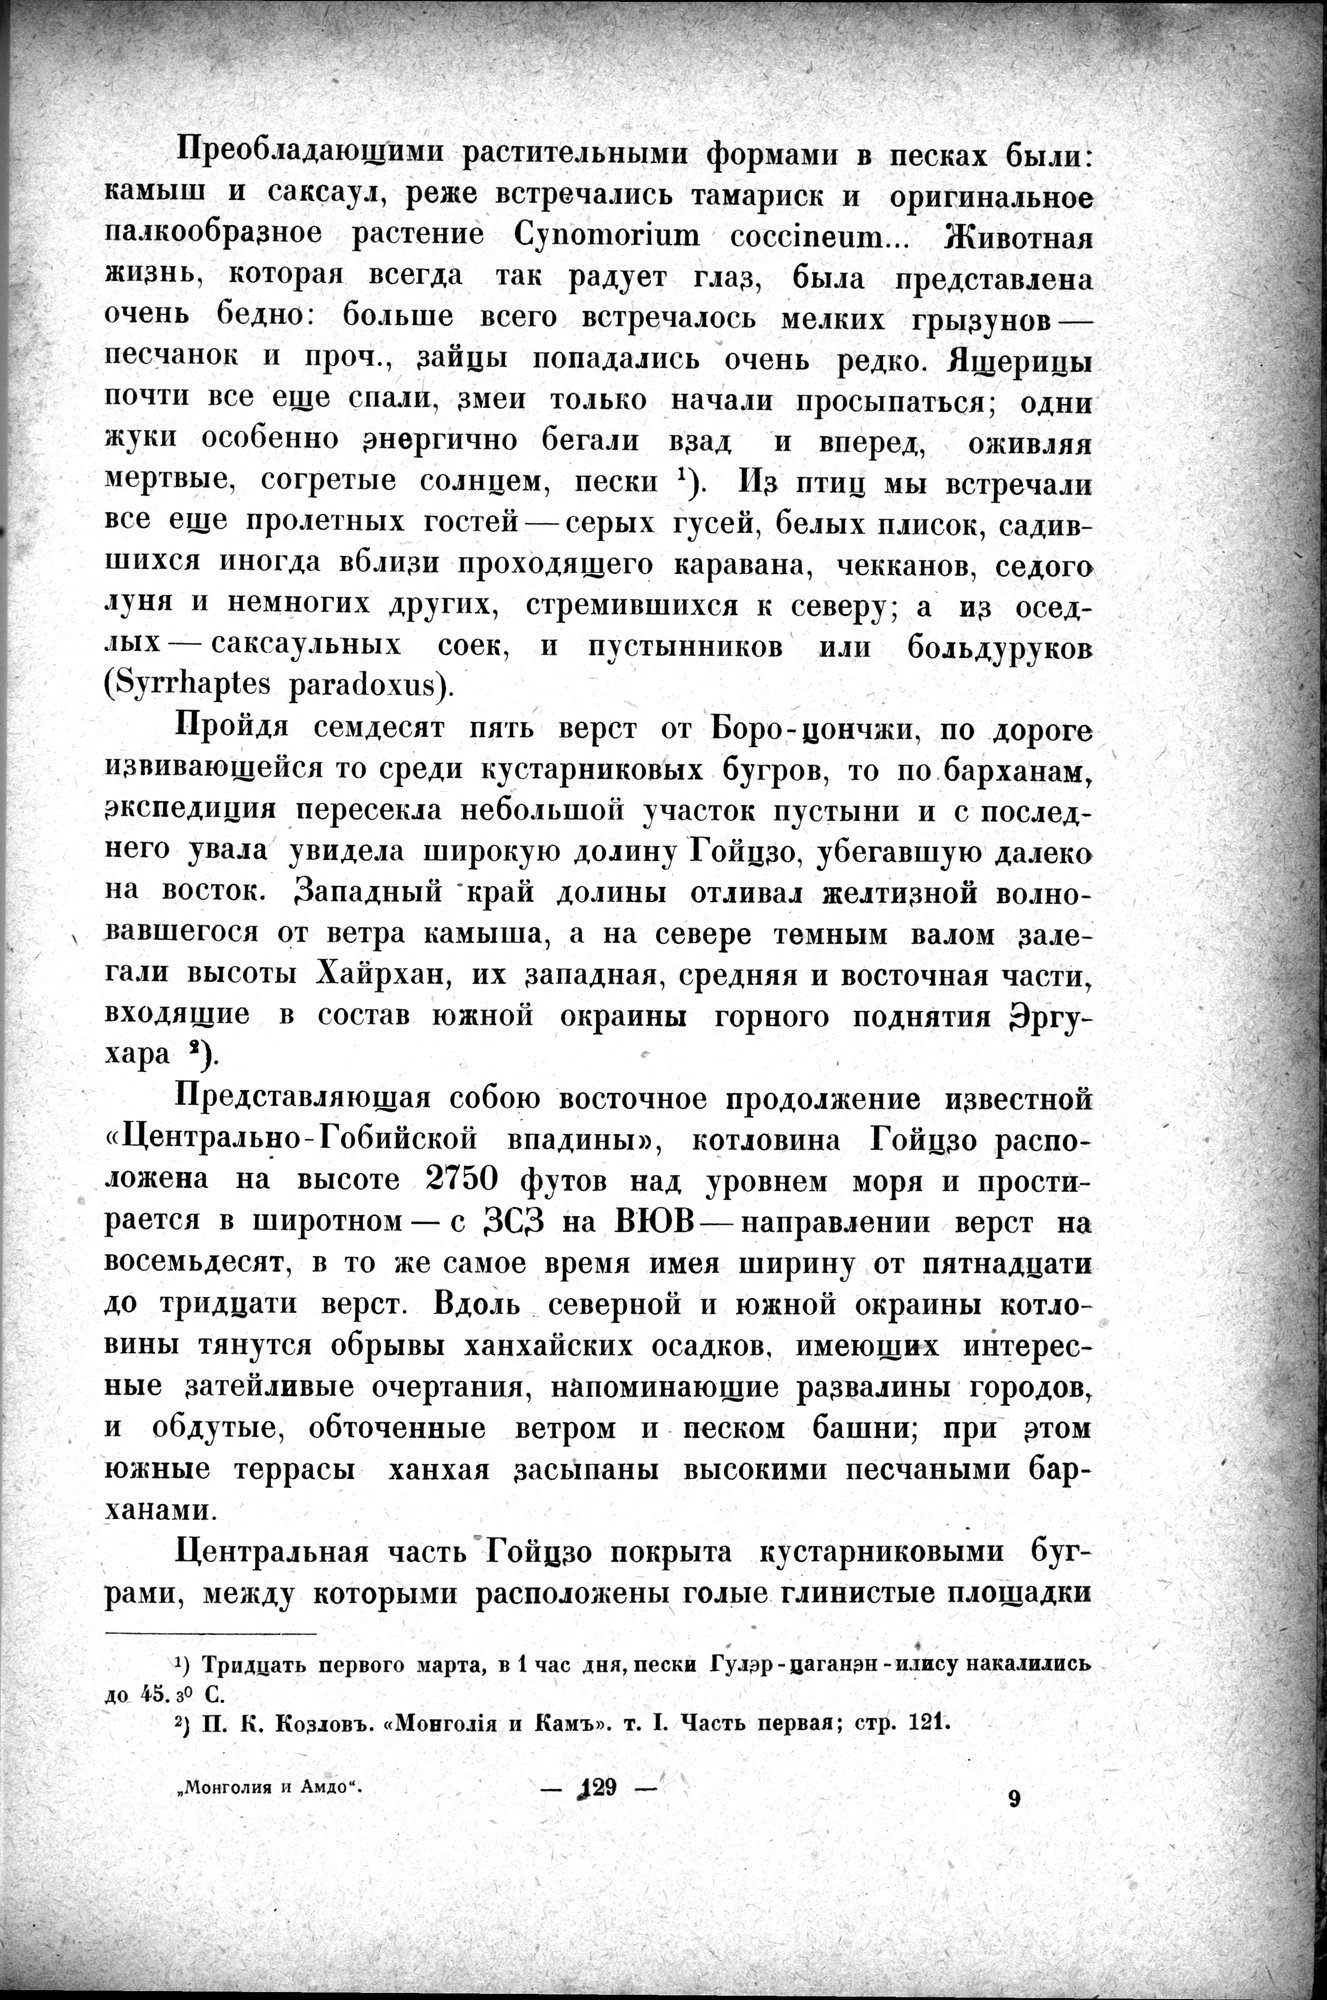 Mongoliya i Amdo i mertby gorod Khara-Khoto : vol.1 / Page 157 (Grayscale High Resolution Image)